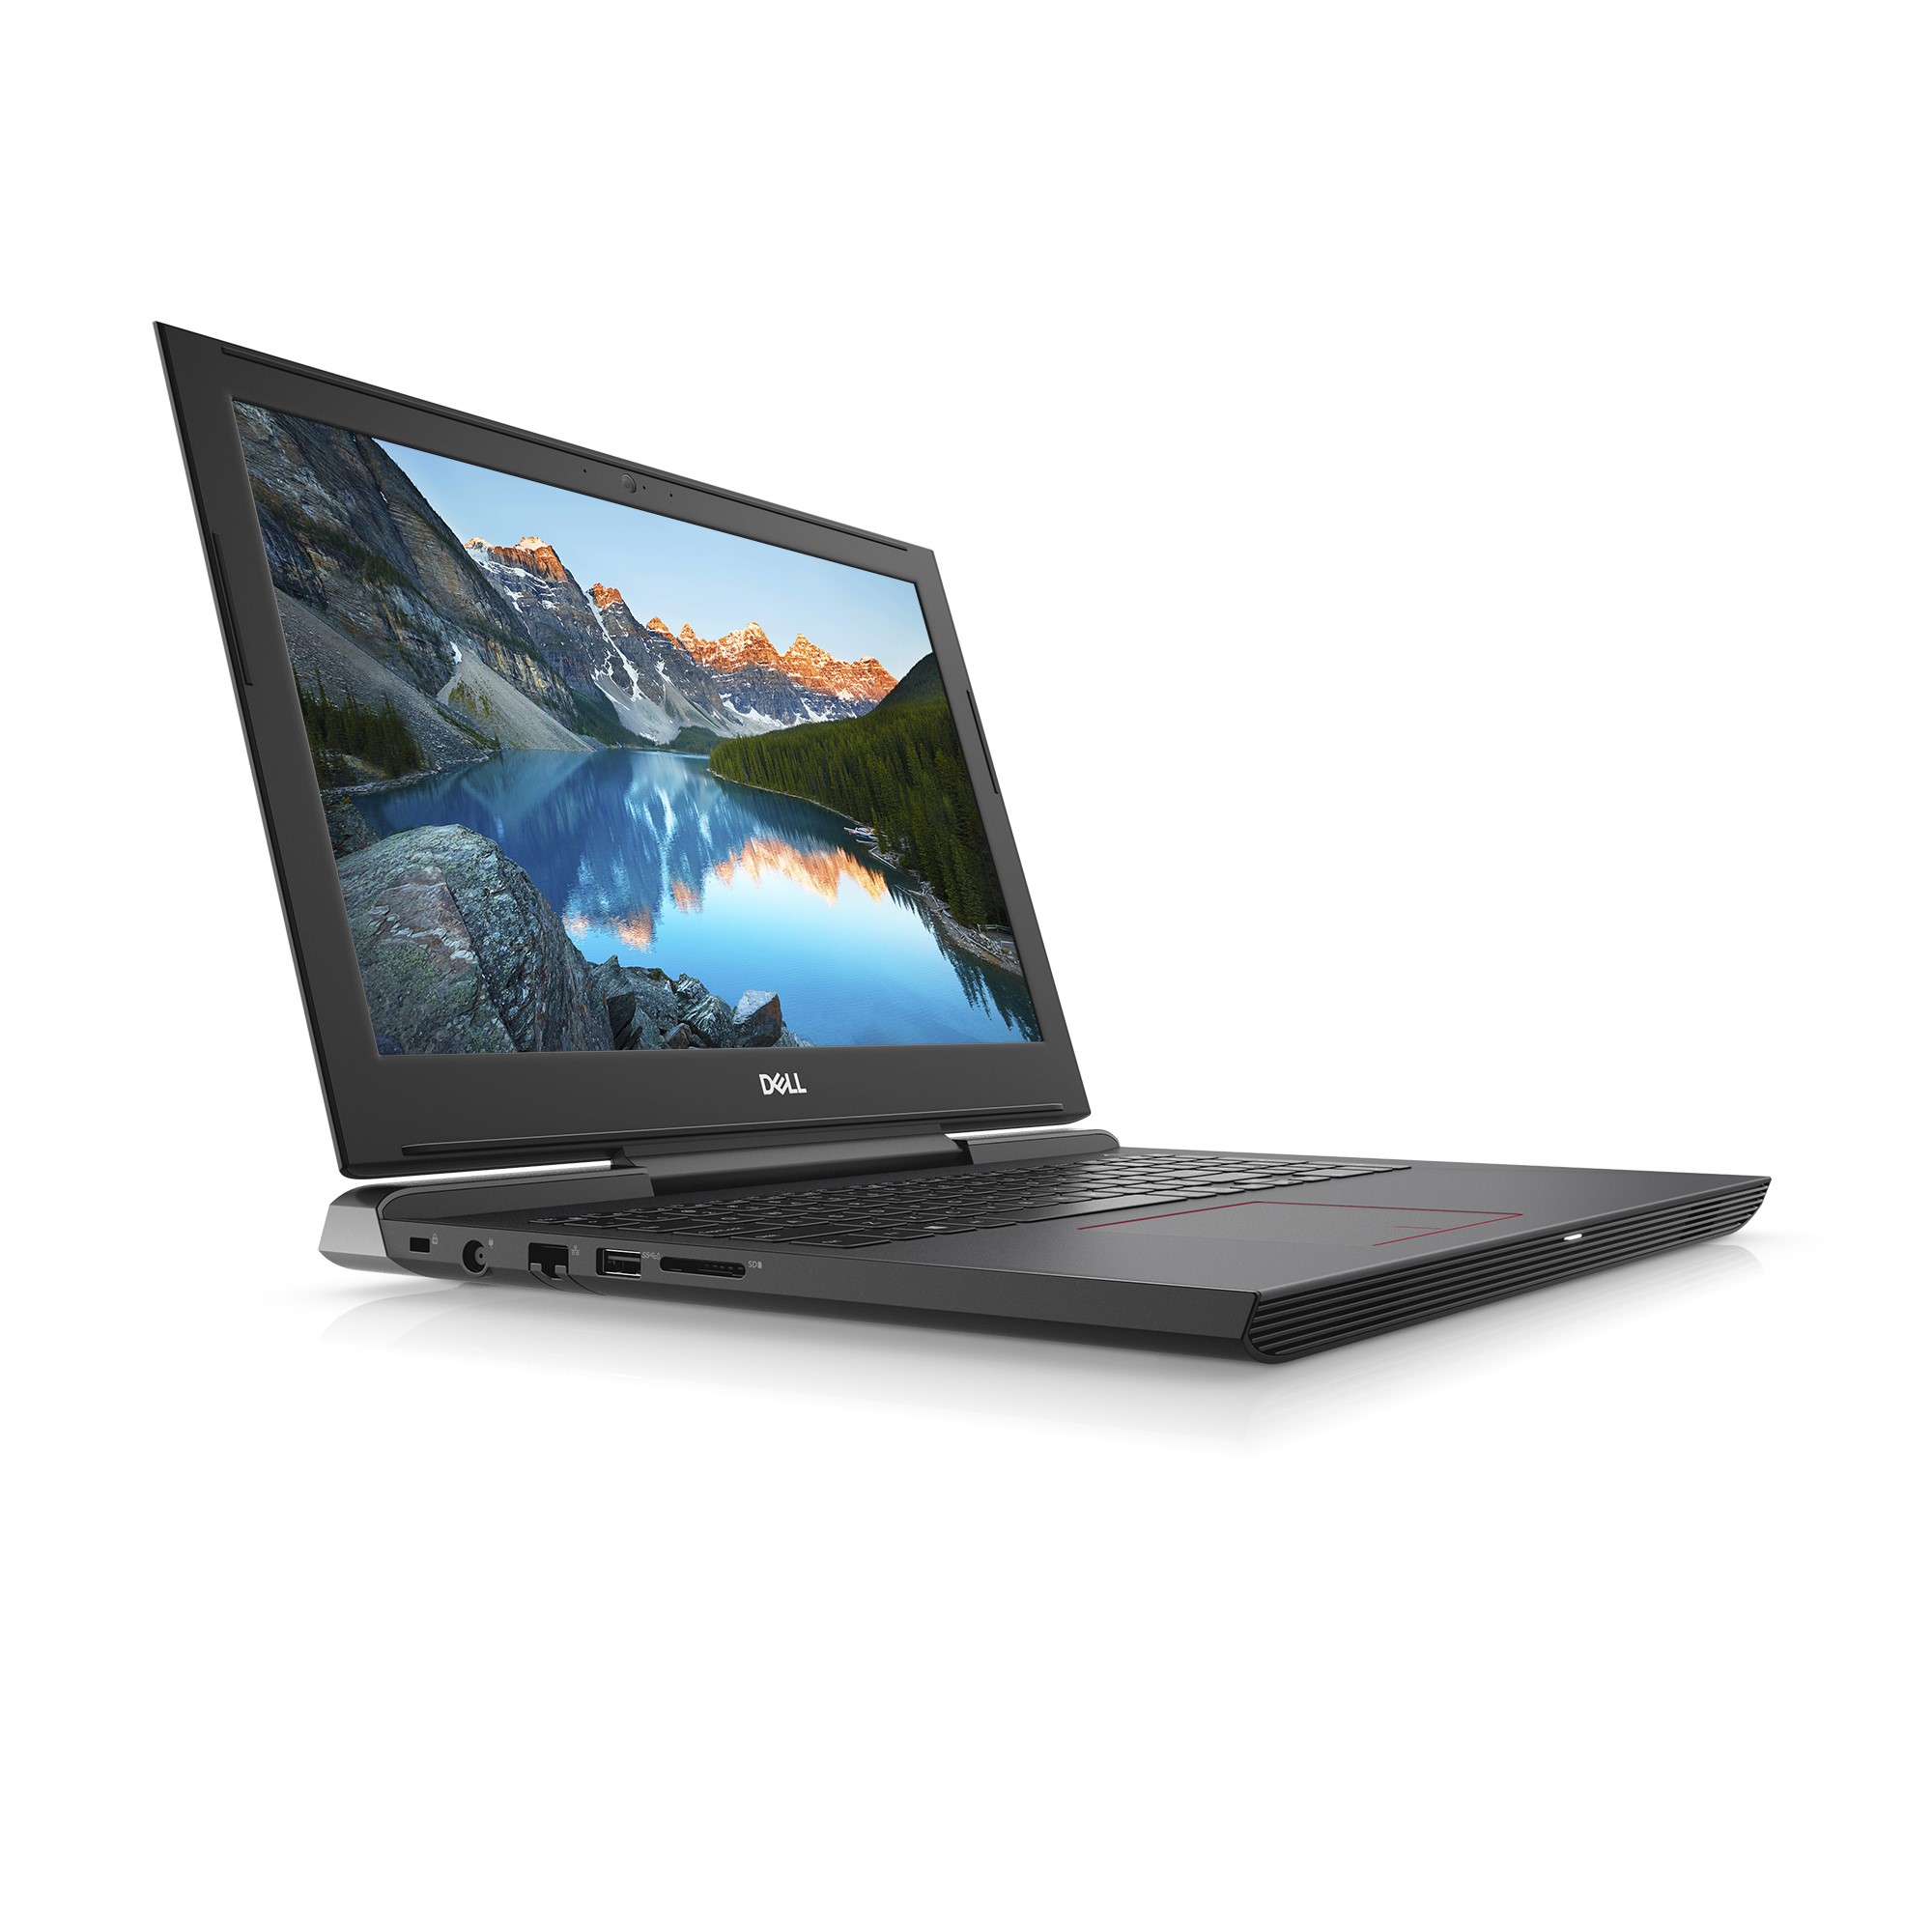 Dell G5587-5542BLK-PUS Laptop 15.6" FHD, Intel i5-8300H, 16GB RAM, GTX 1060, 256GB SSD+1TB HDD, Black - image 1 of 3